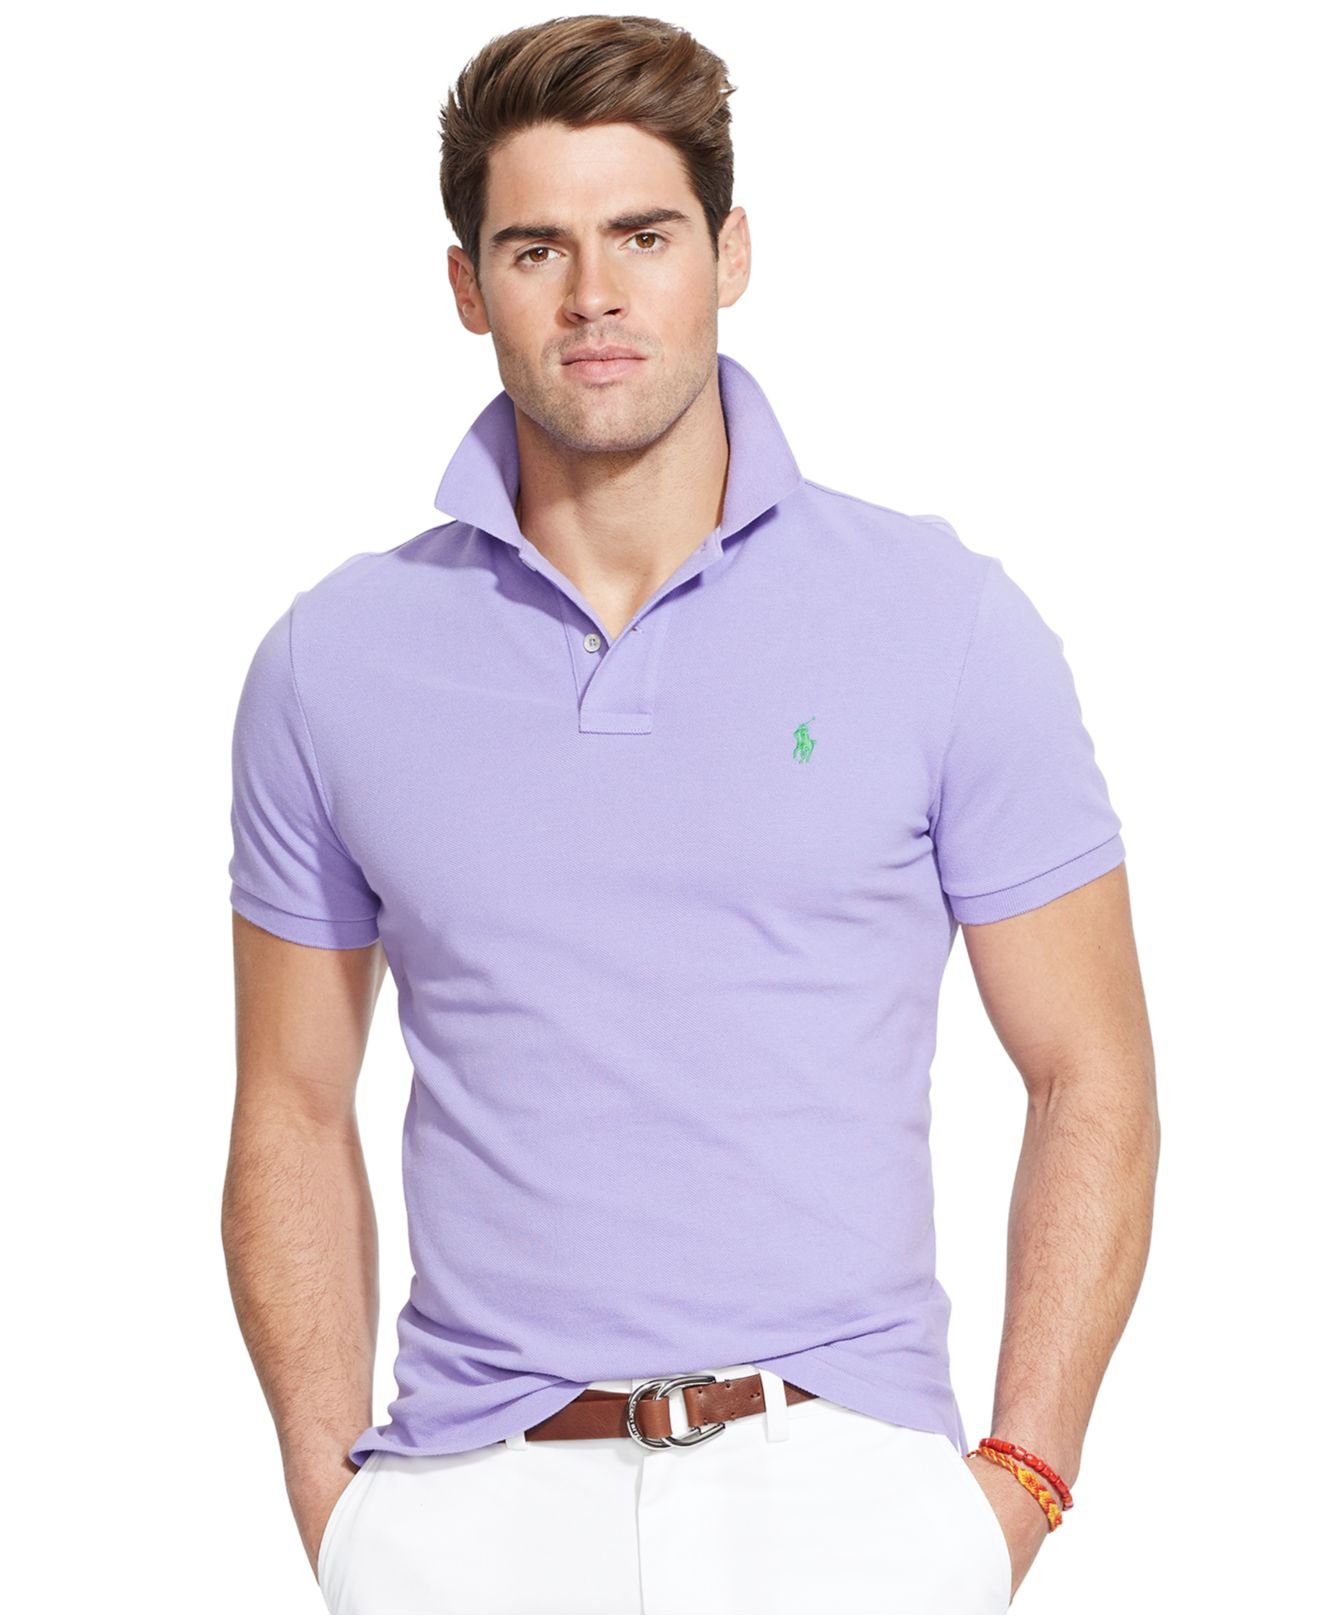 Polo Ralph Lauren Custom-fit Mesh Polo Shirt in Purple for Men - Lyst